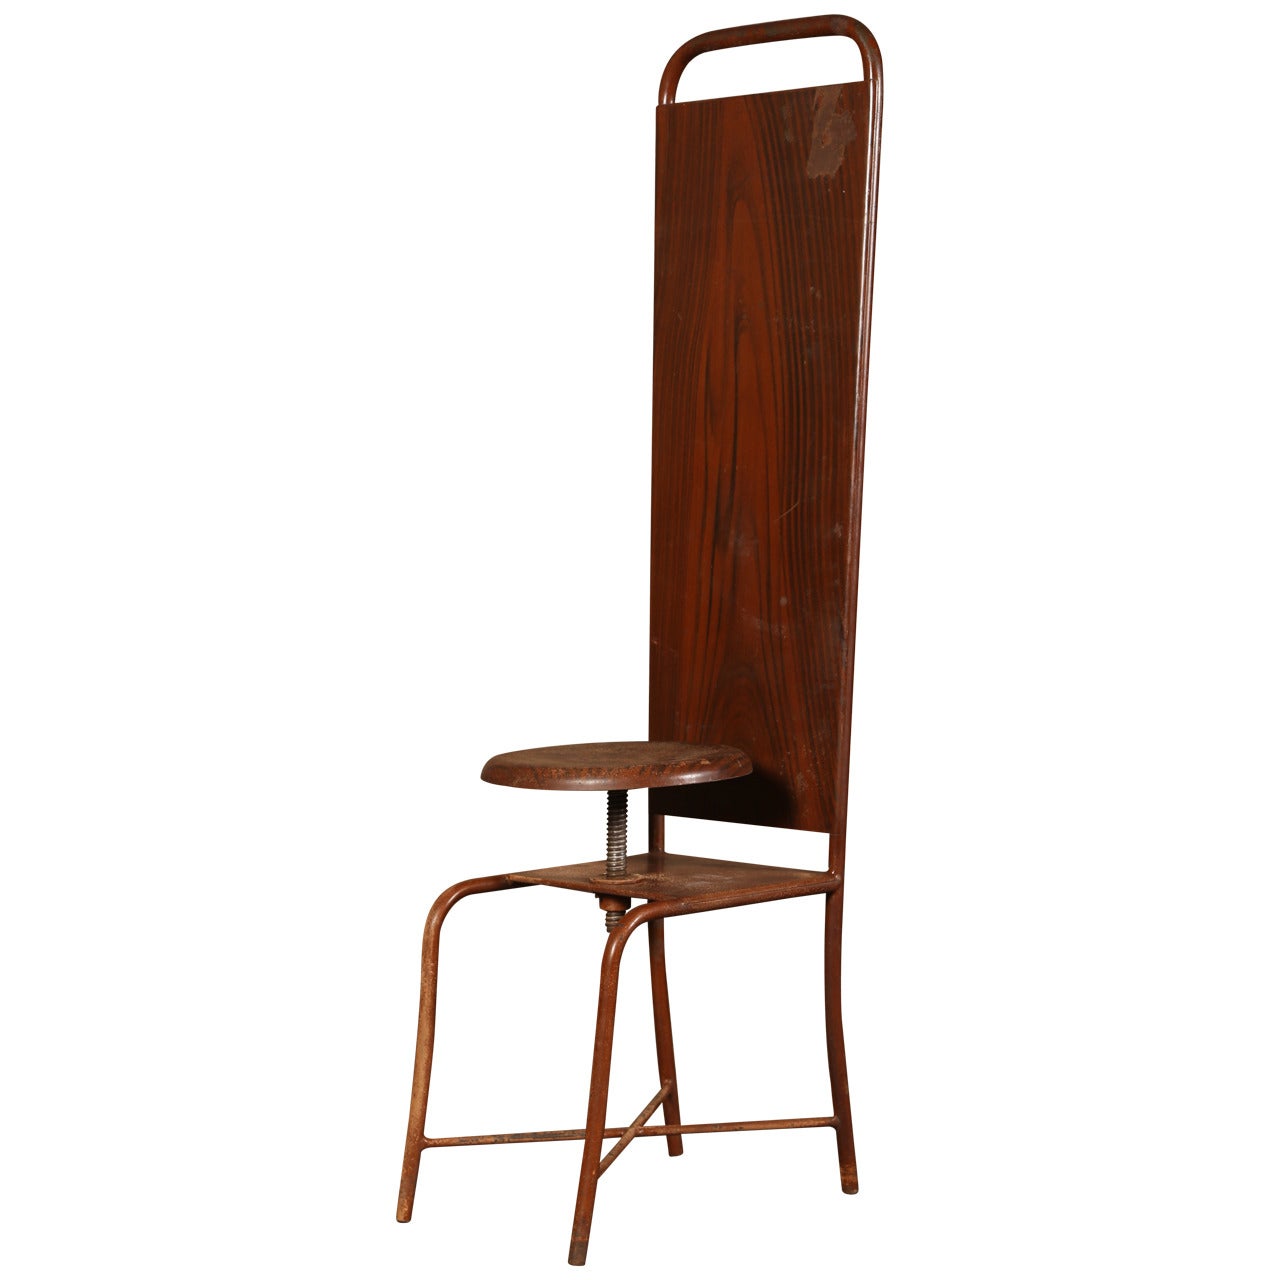 Original, Vintage Adjustable Medical Stool or Chair